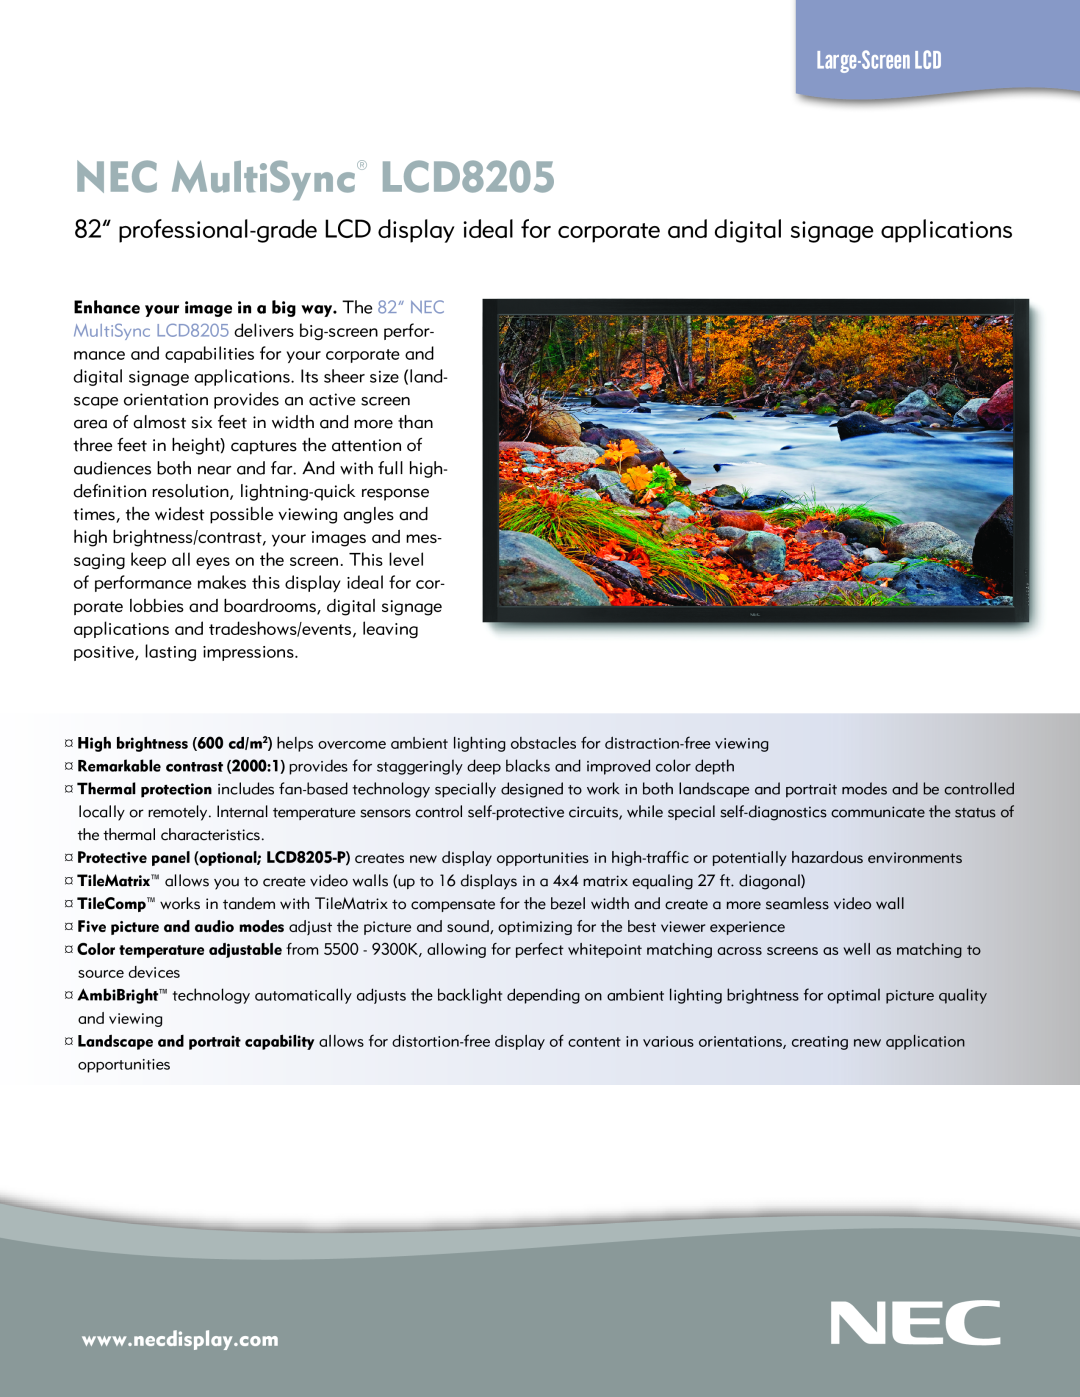 NEC manual NEC MultiSync LCD8205, Large-ScreenLCD 